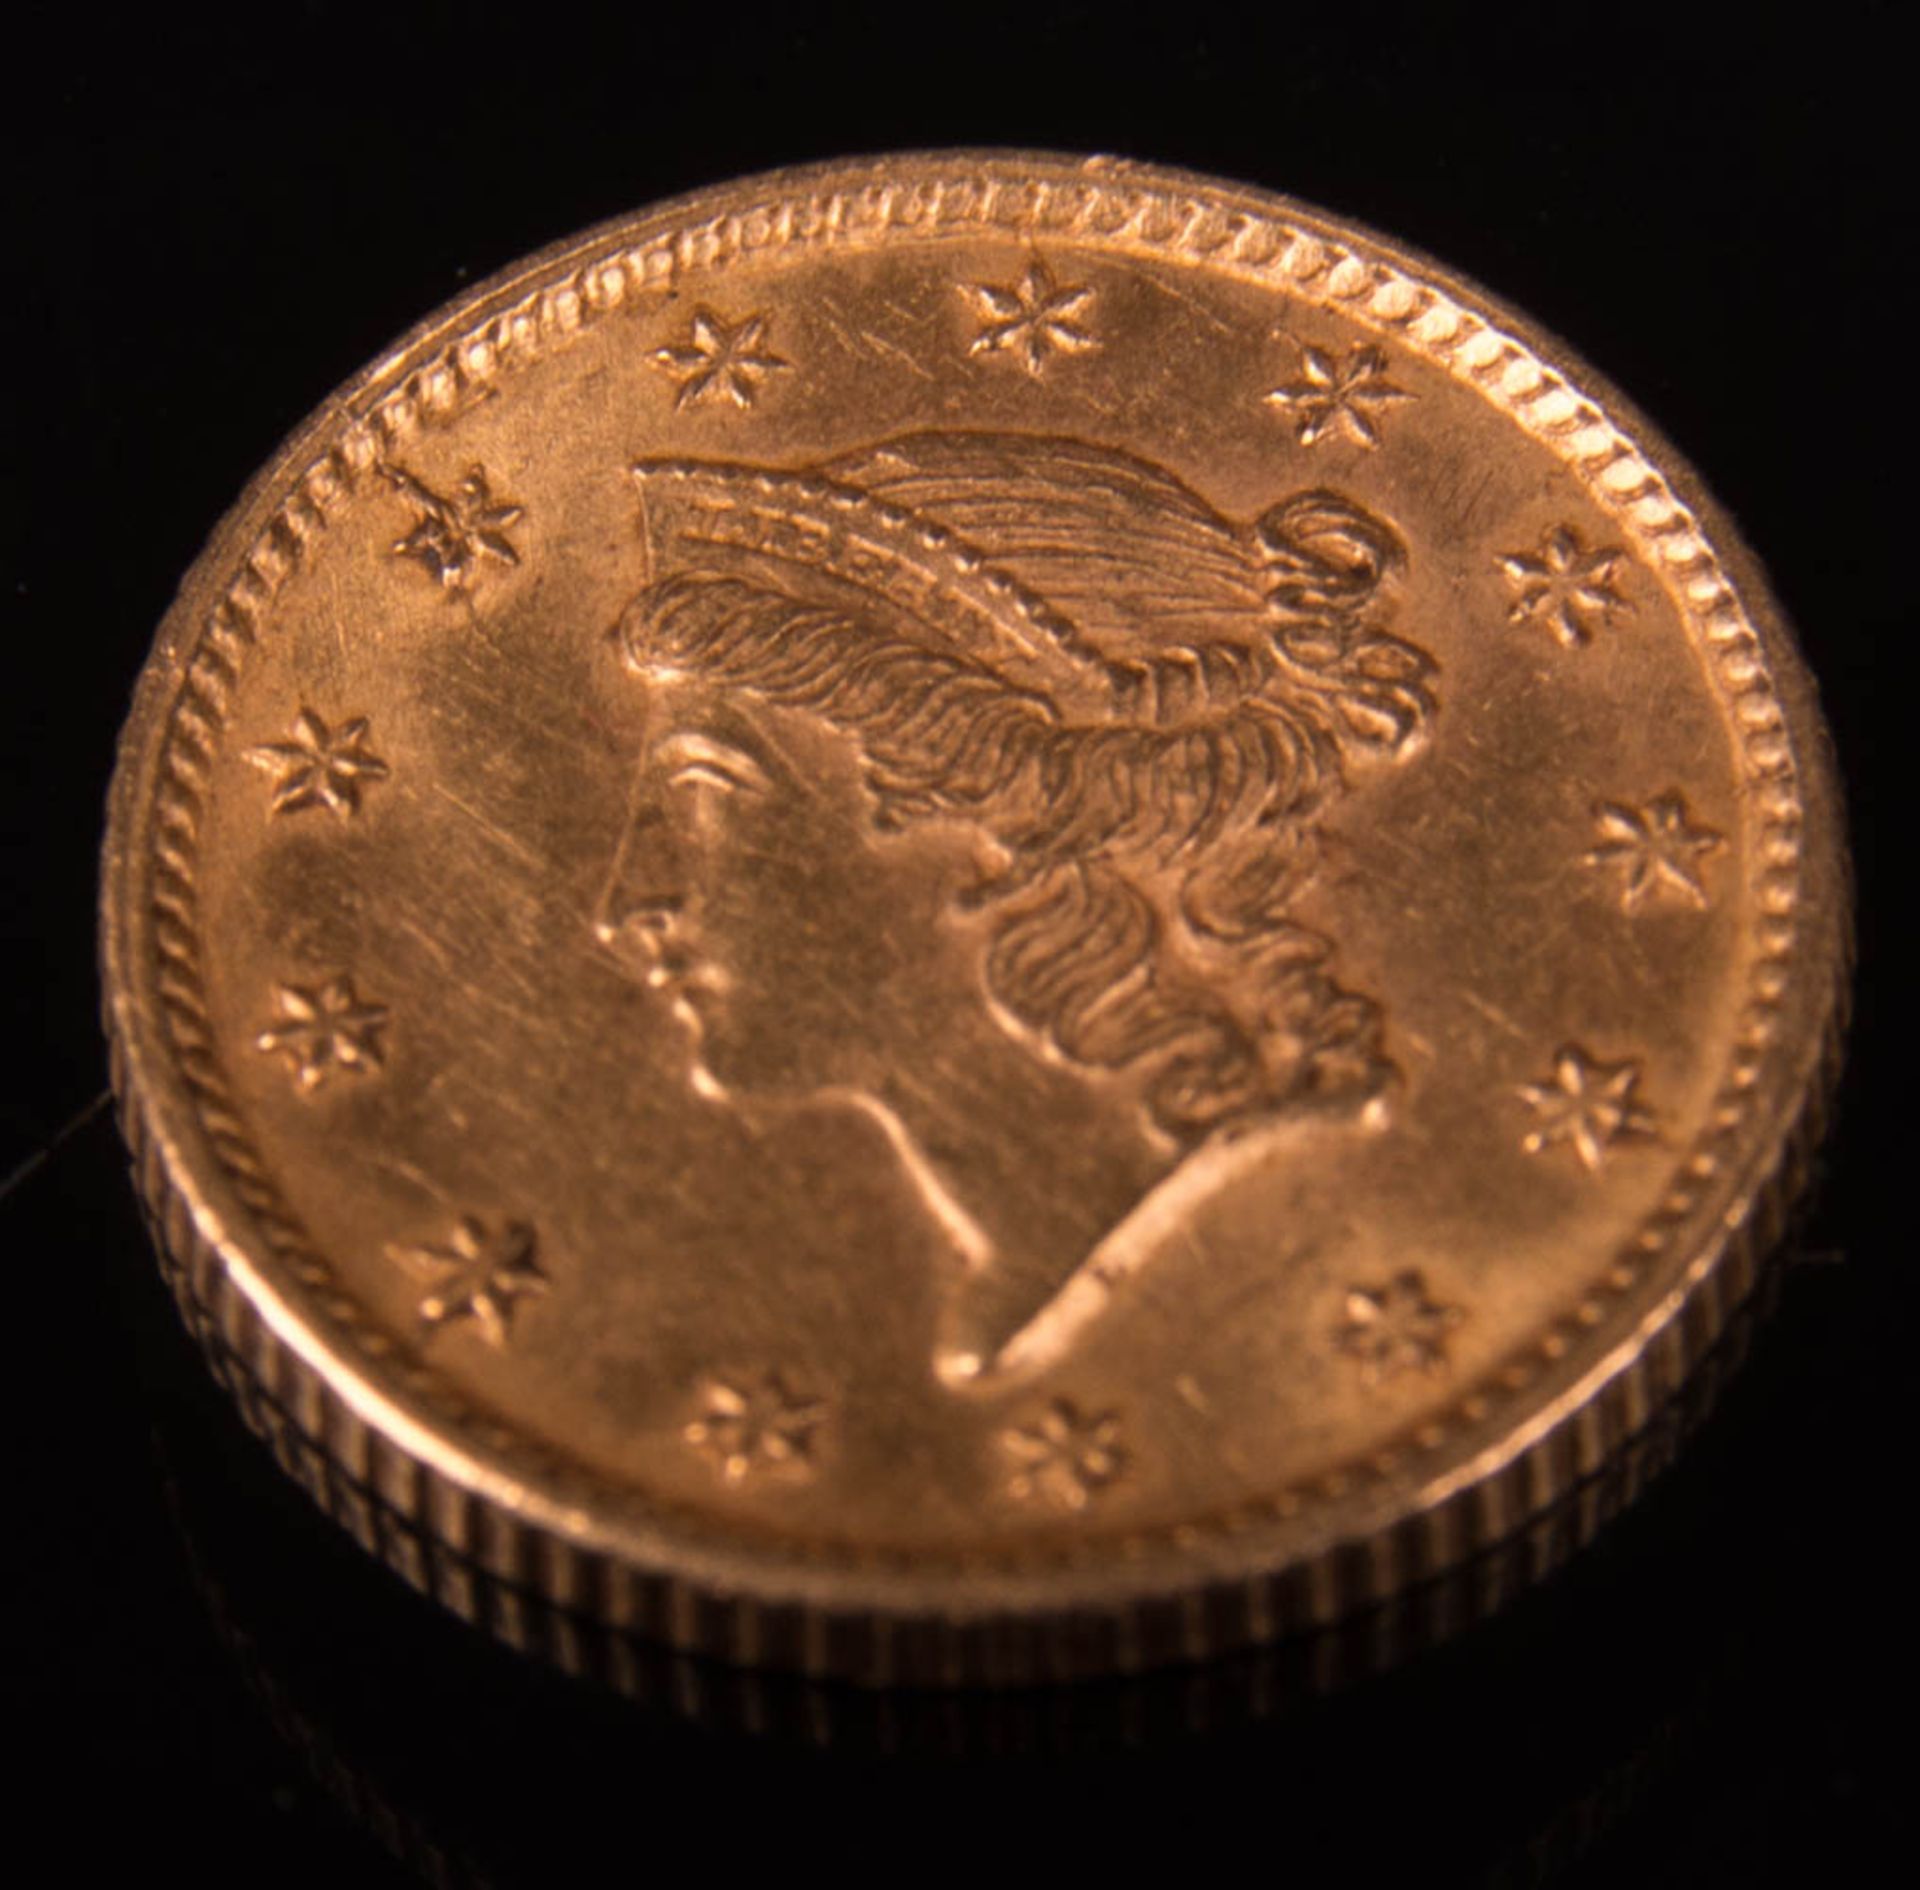 Goldmünze USA, Liberty Head, 1 Dollar 1854.